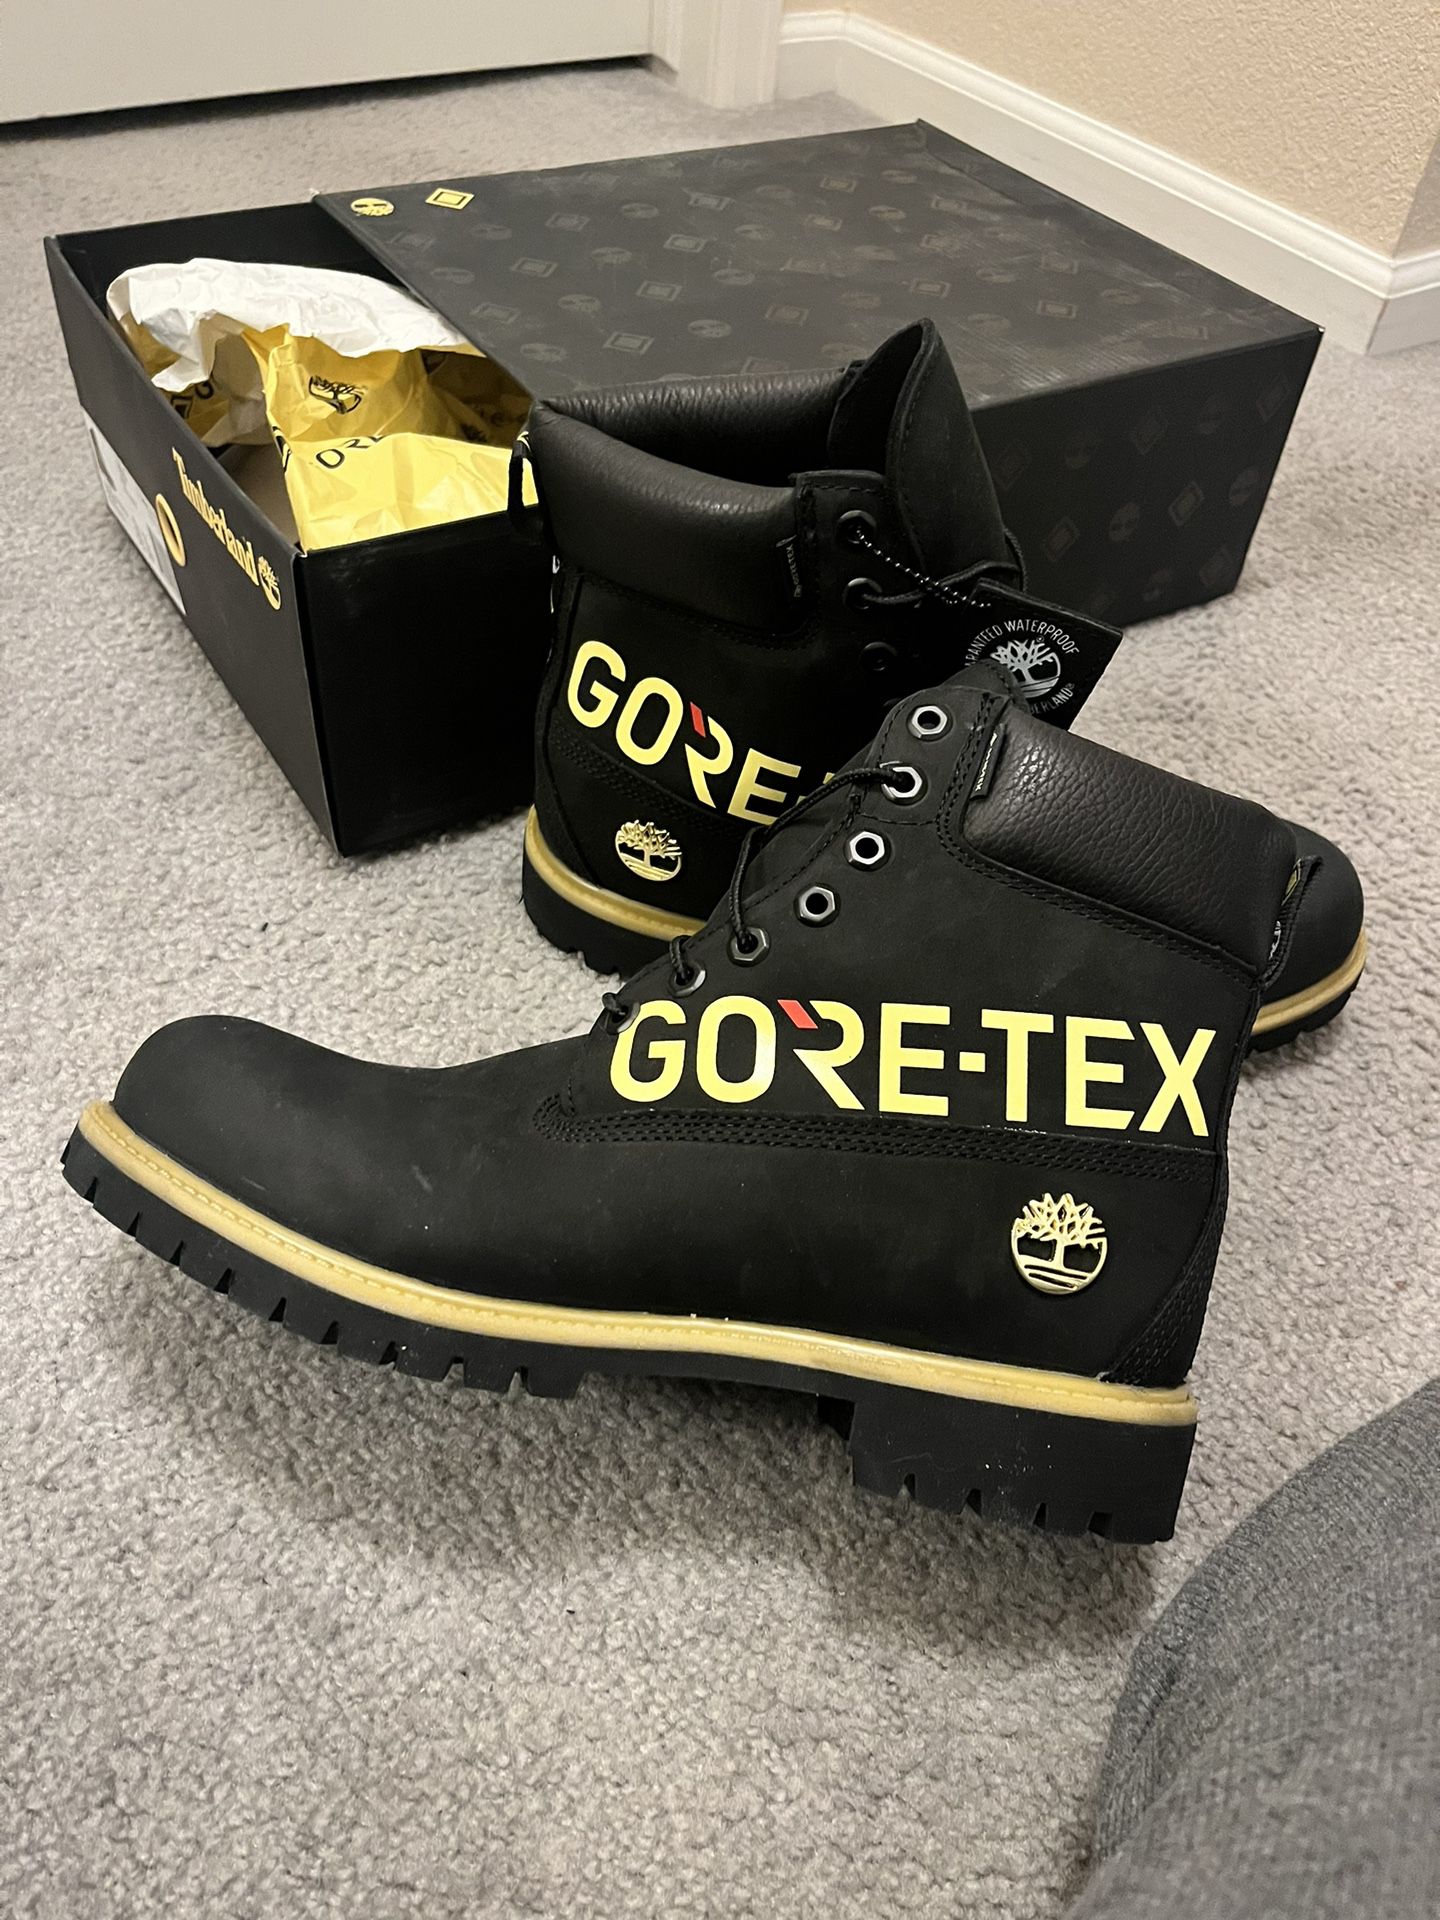 Timberland Premium Goretex GTX Limited Edition Boot - Brand New/Never Worn - 10.5